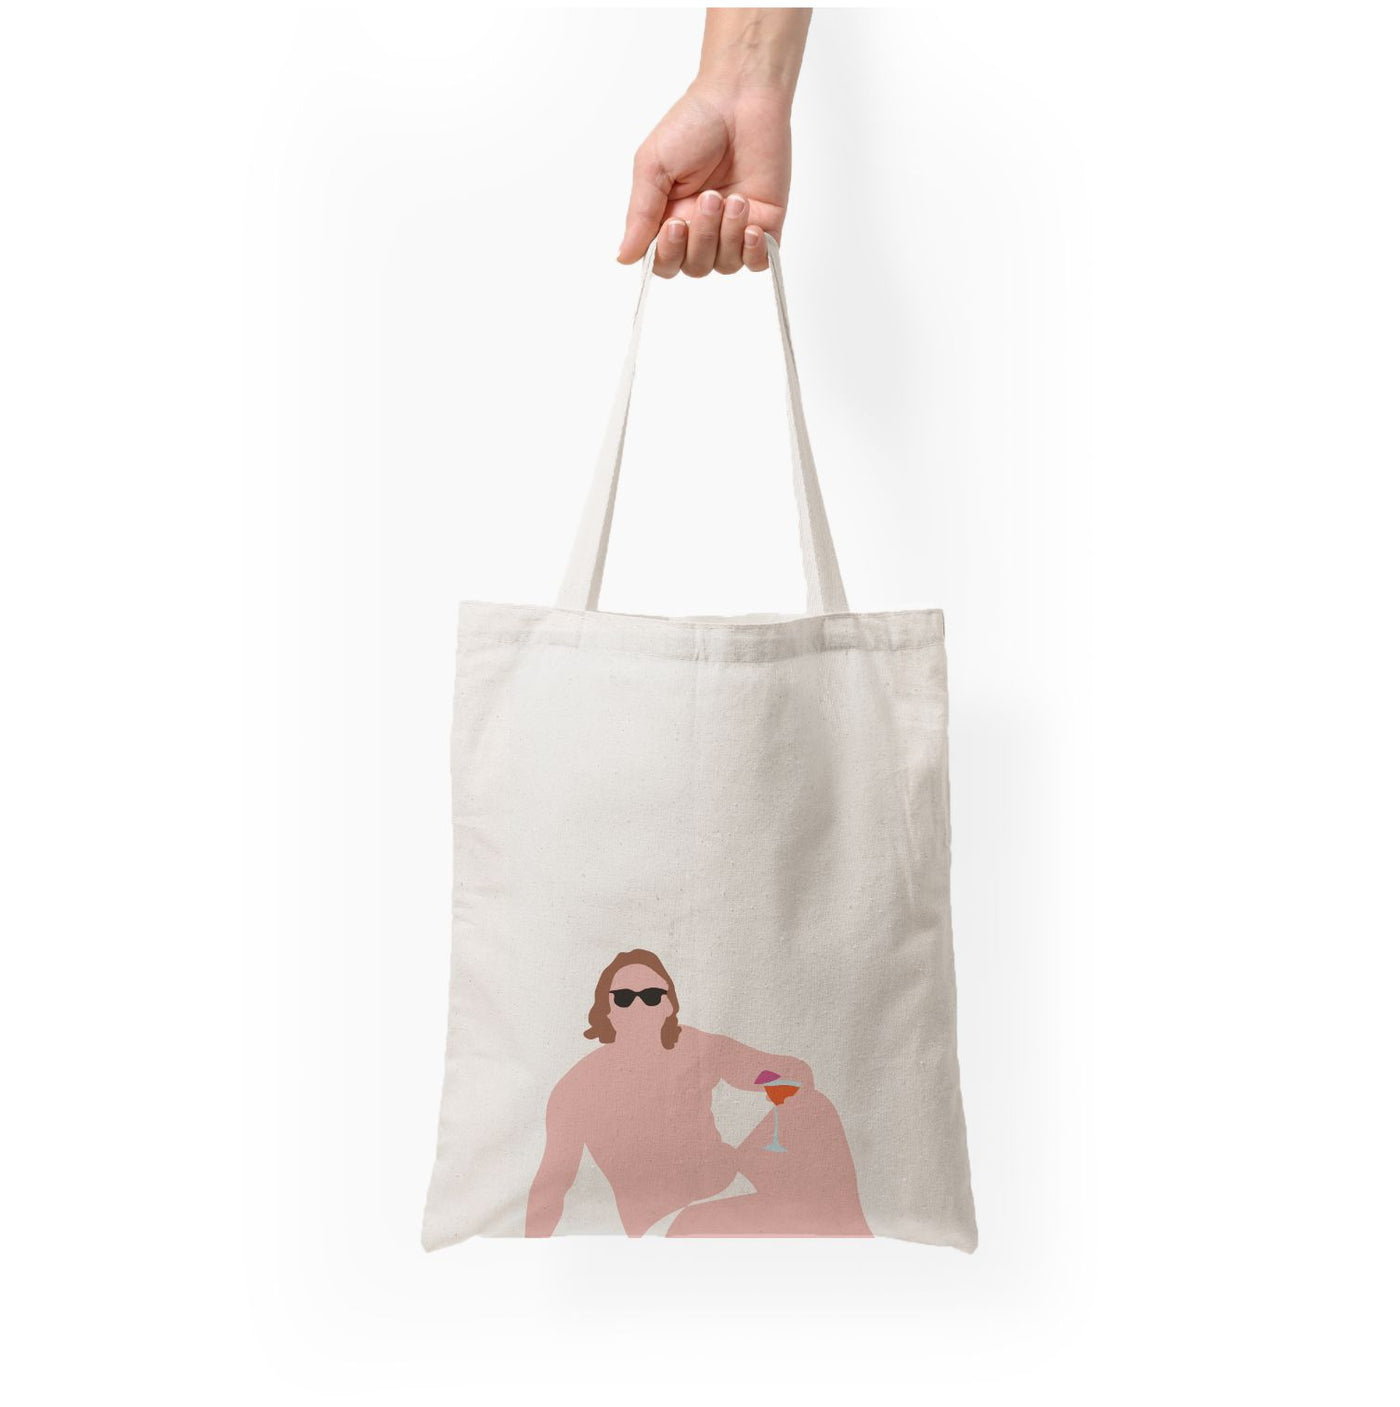 Bathing - Lewis Capaldi Tote Bag